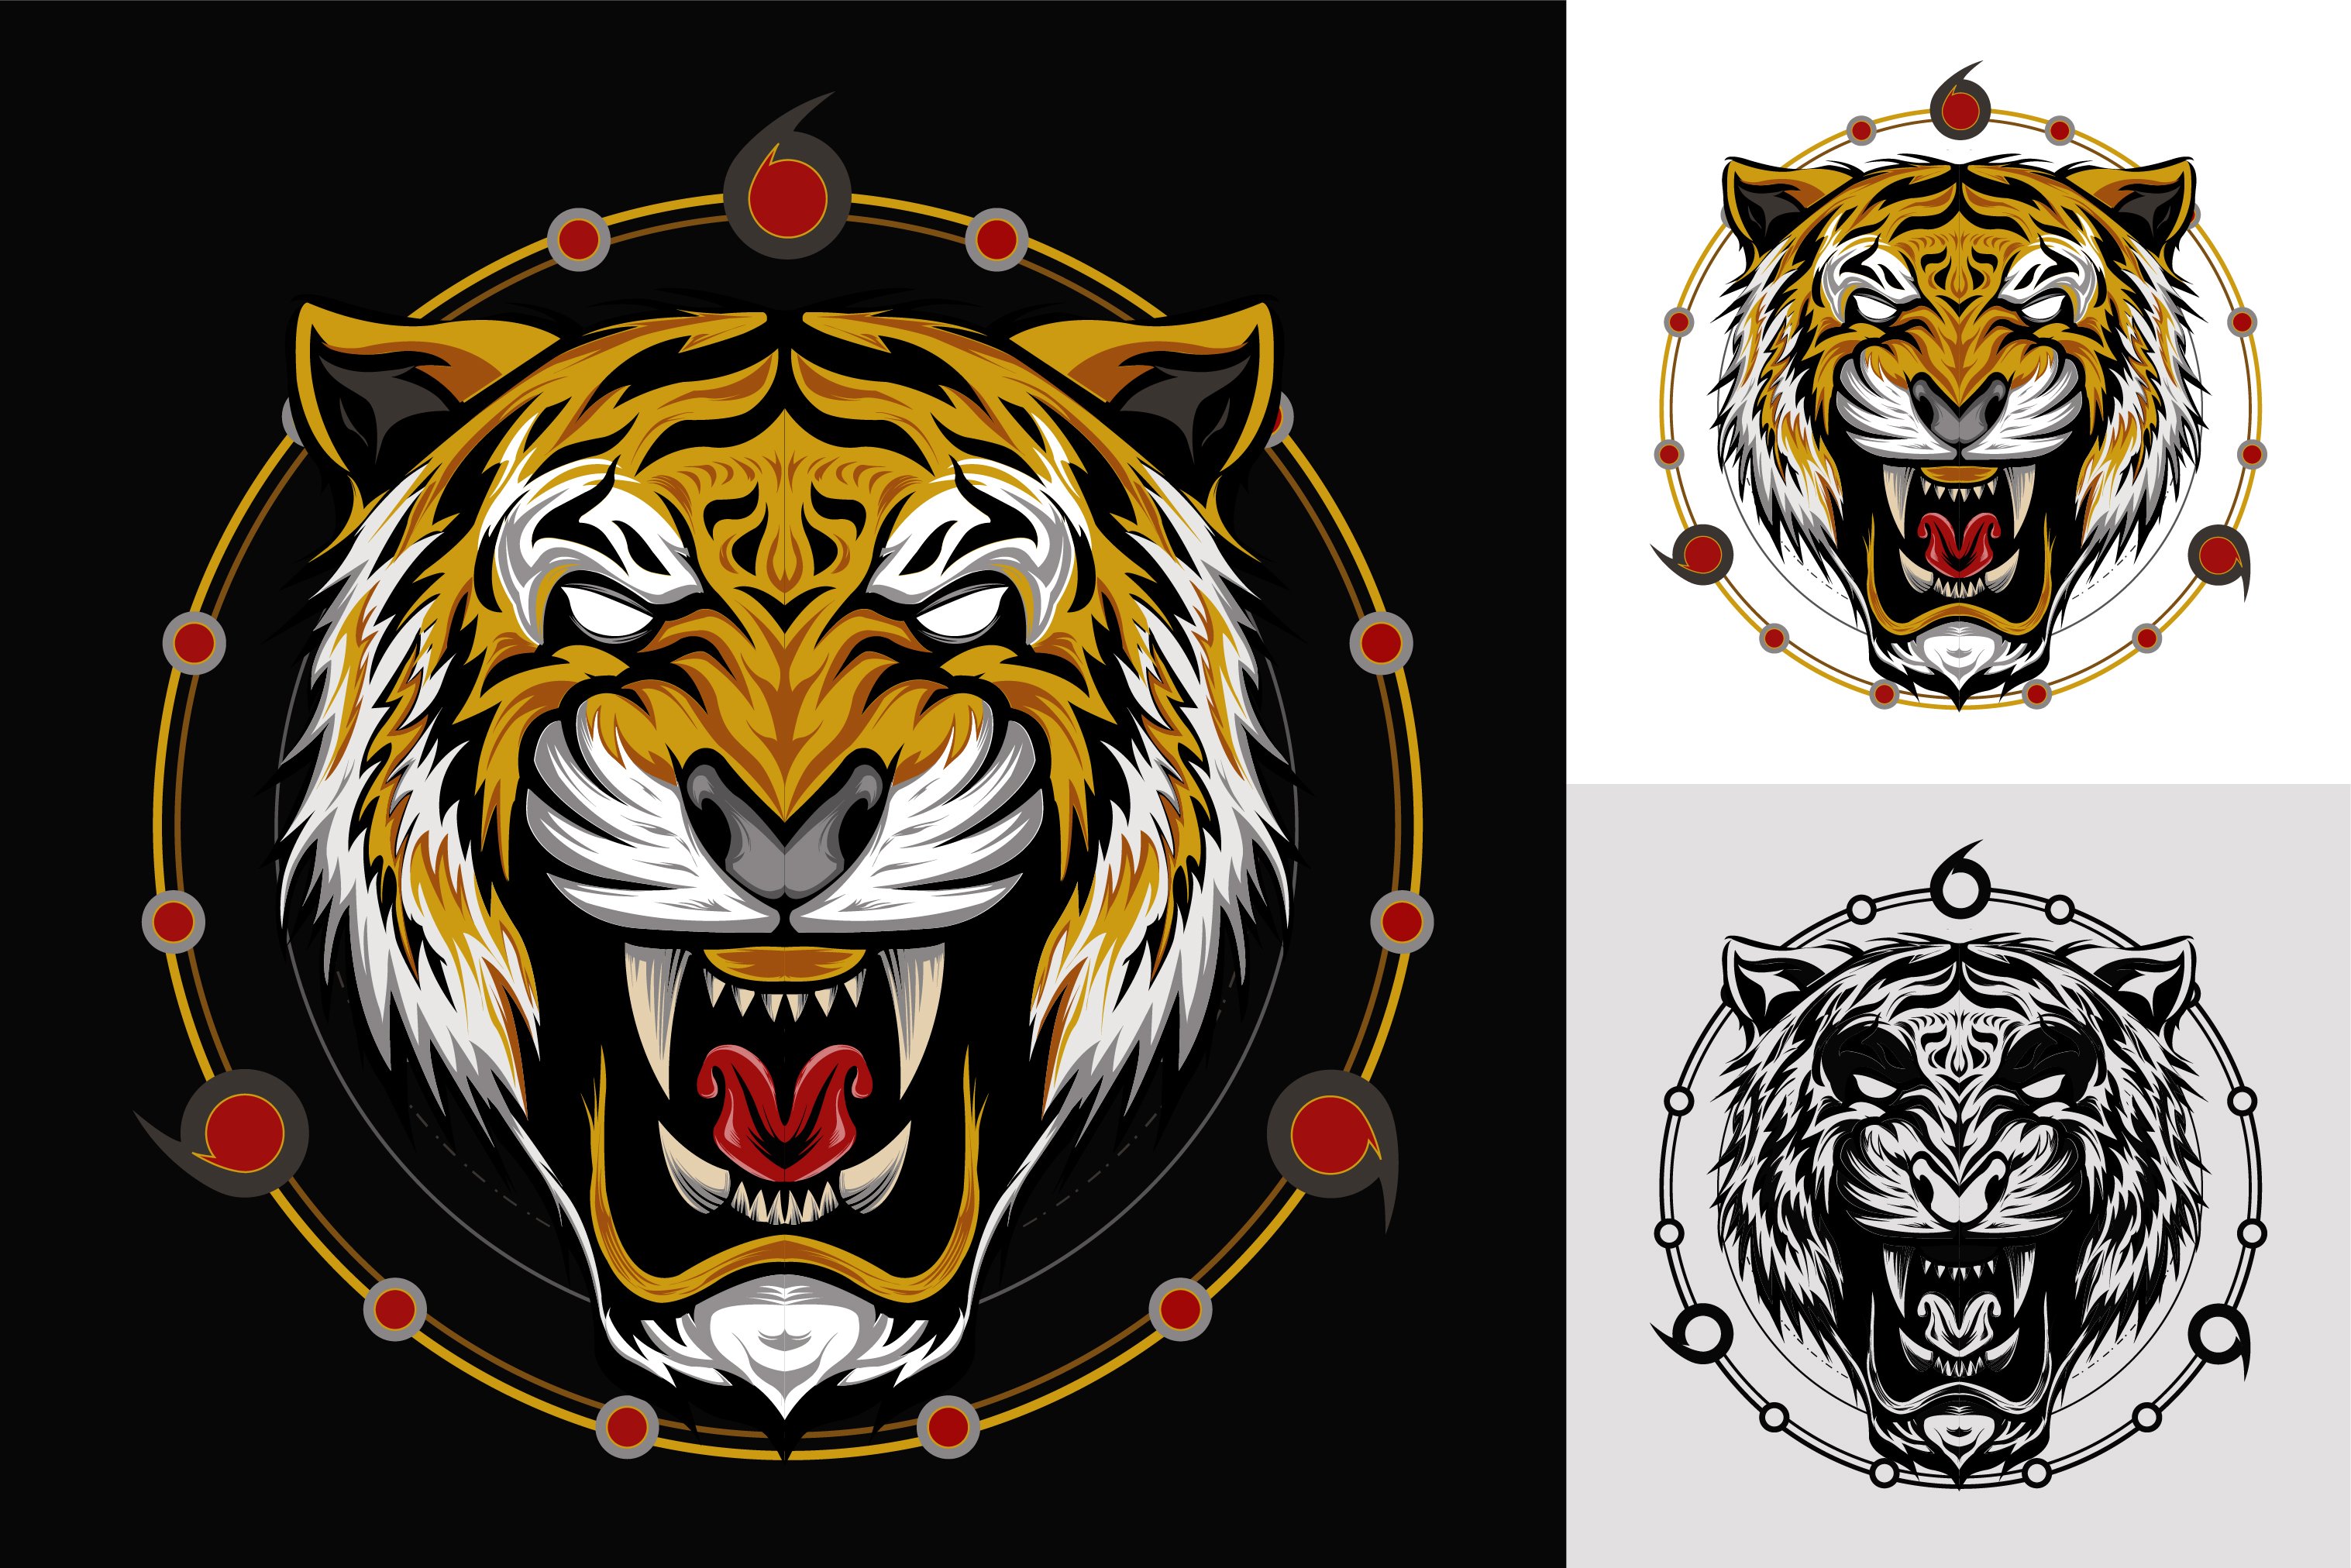 Tiger illustration logo with sacred cover image.